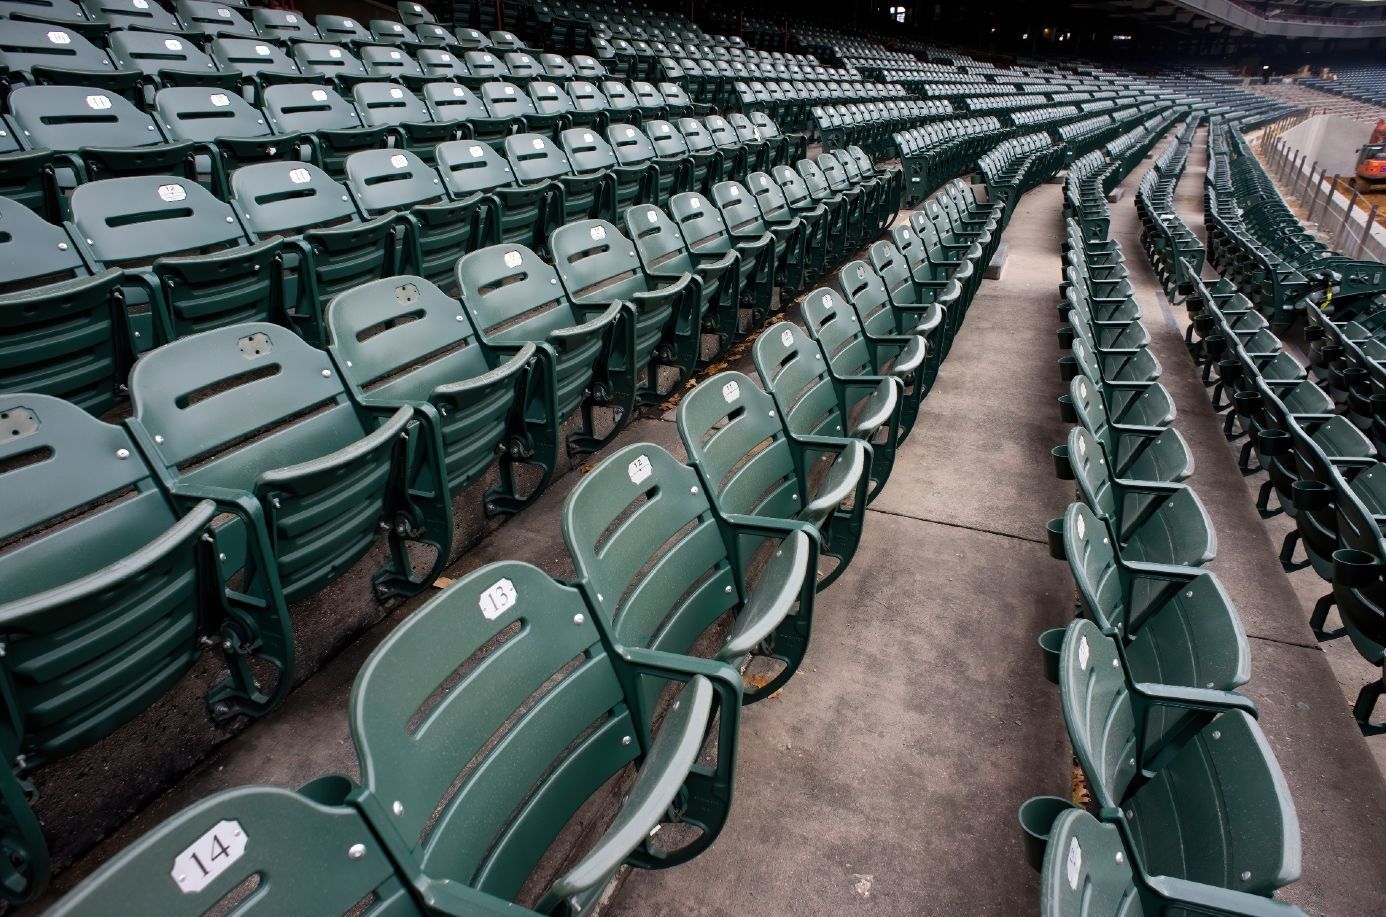 Green stadium seats sit empty during the pandemic - minor league baseball